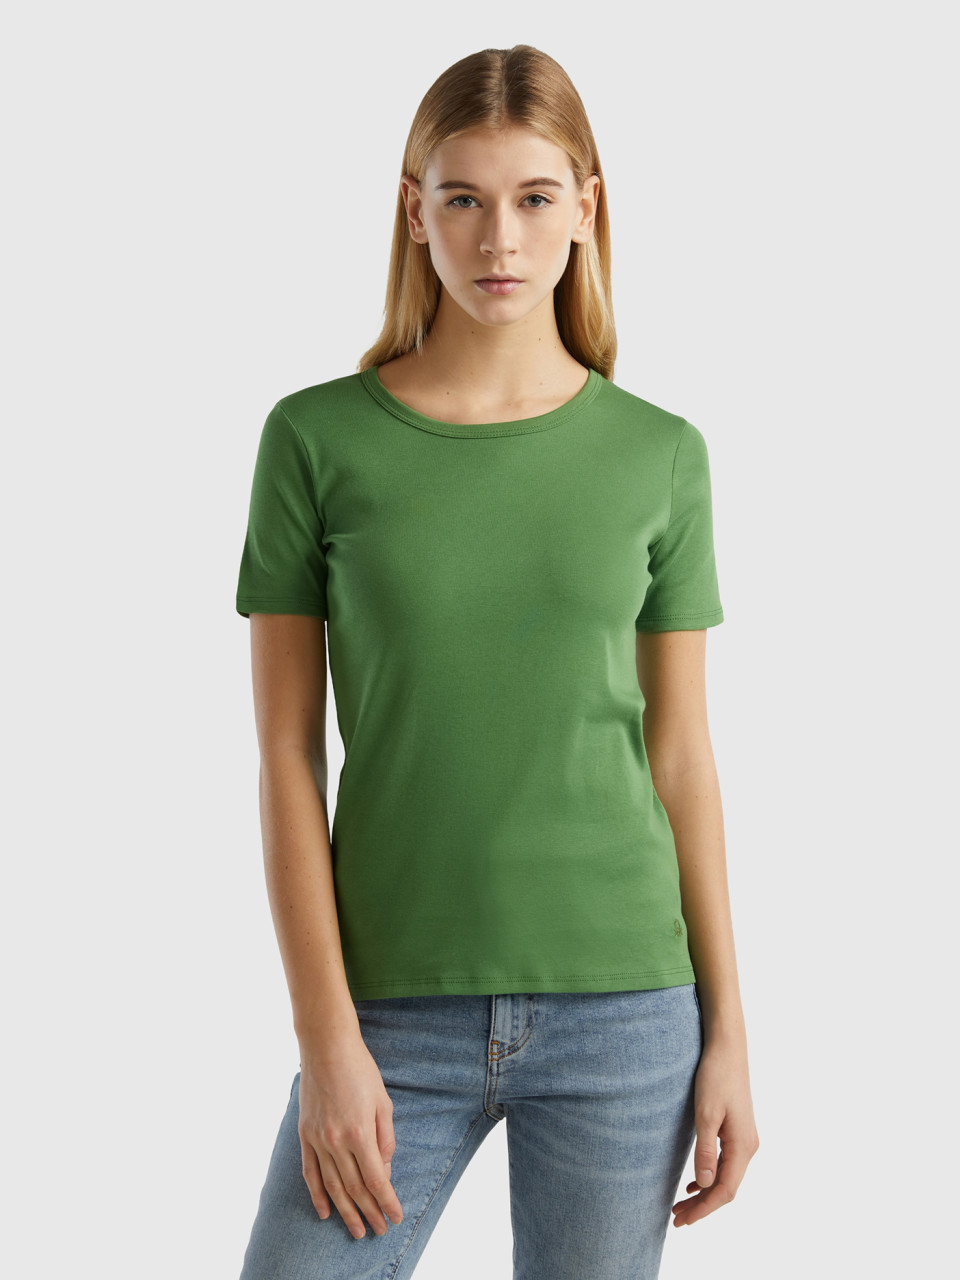 Benetton, Camiseta De Algodón De Fibra Larga, Militar, Mujer